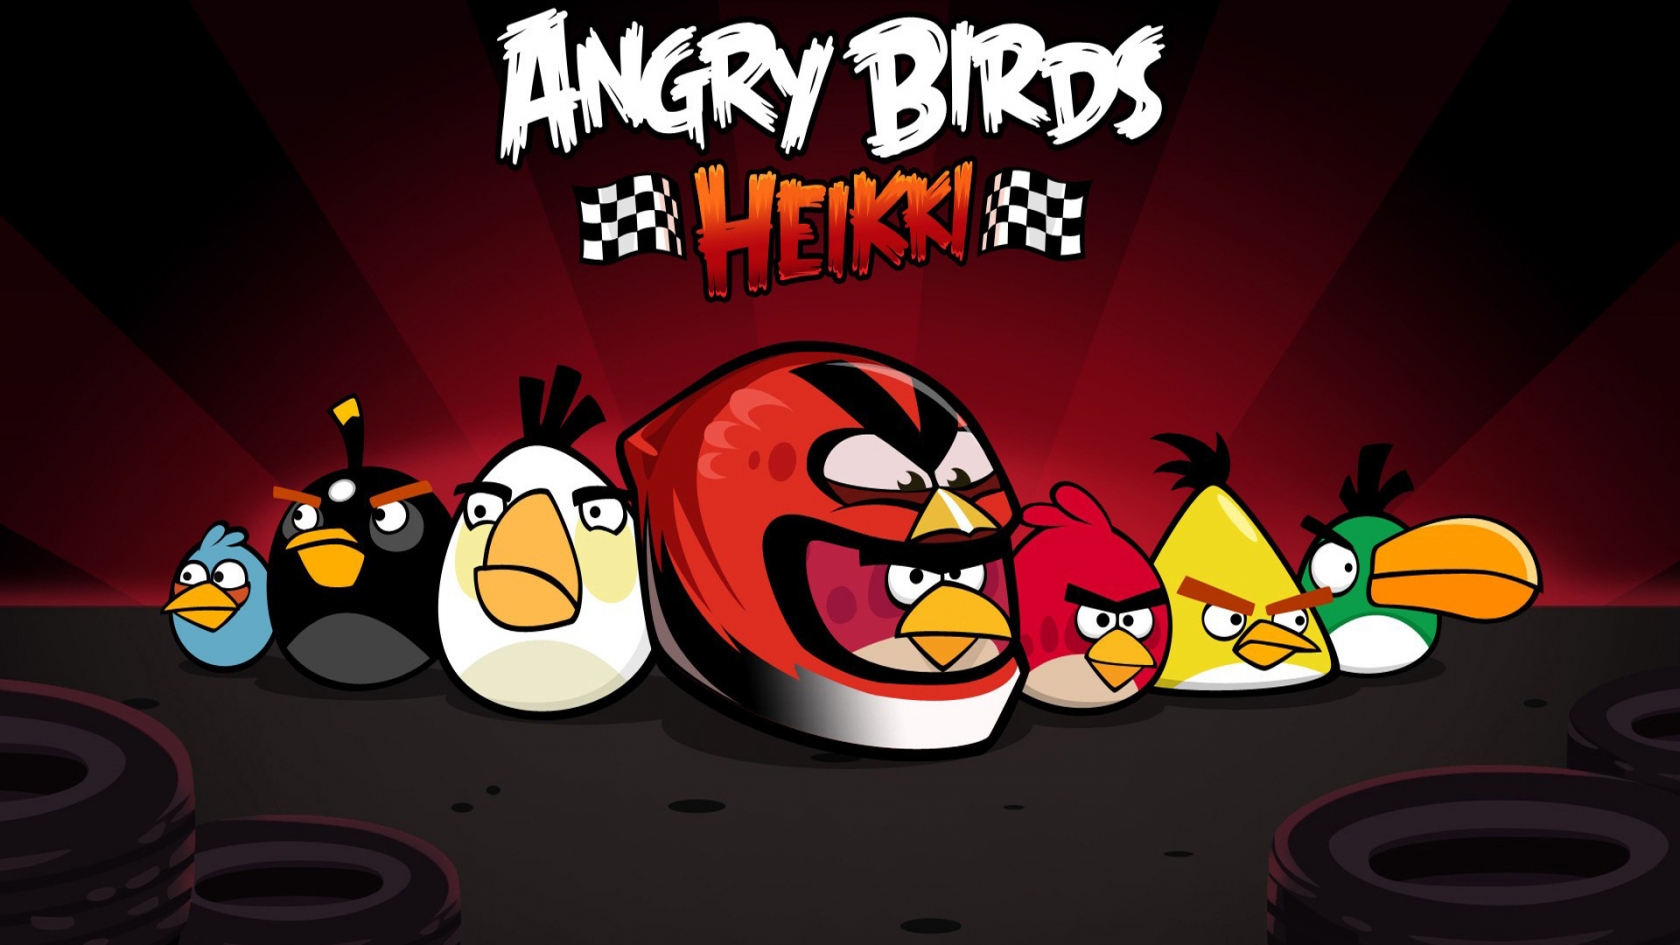 Angry Birds Heikki for 1680 x 945 HDTV resolution